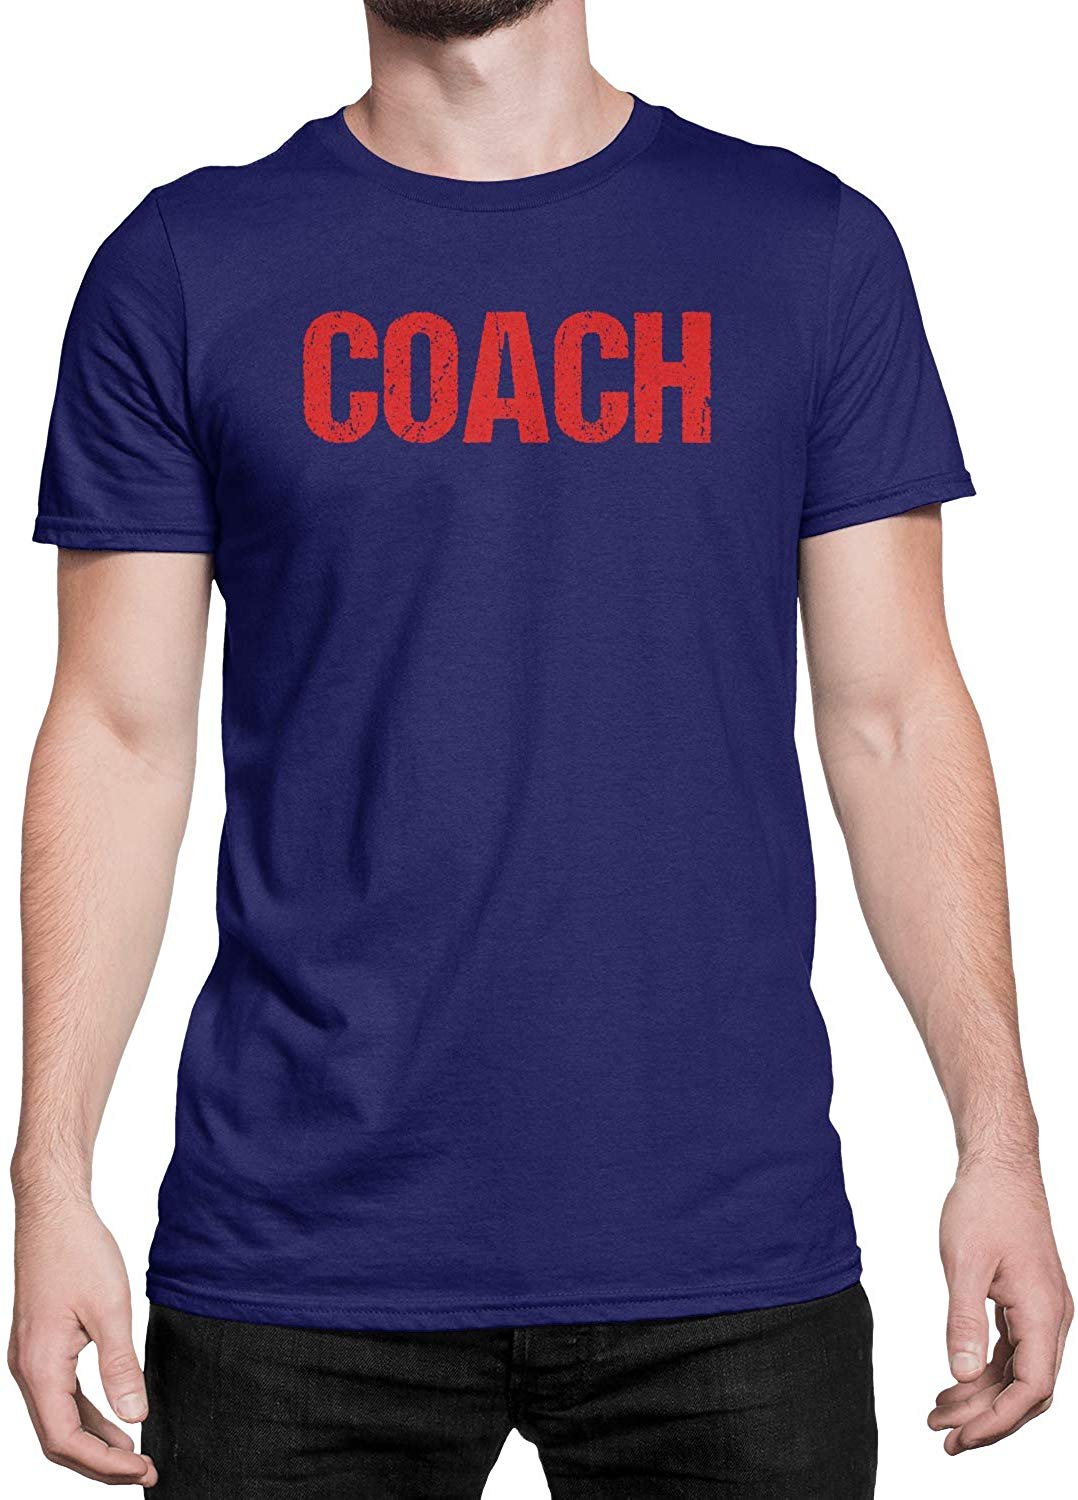 Coach T-Shirt Sports Coaching Tee Shirt (Navy & Red, Distressed)